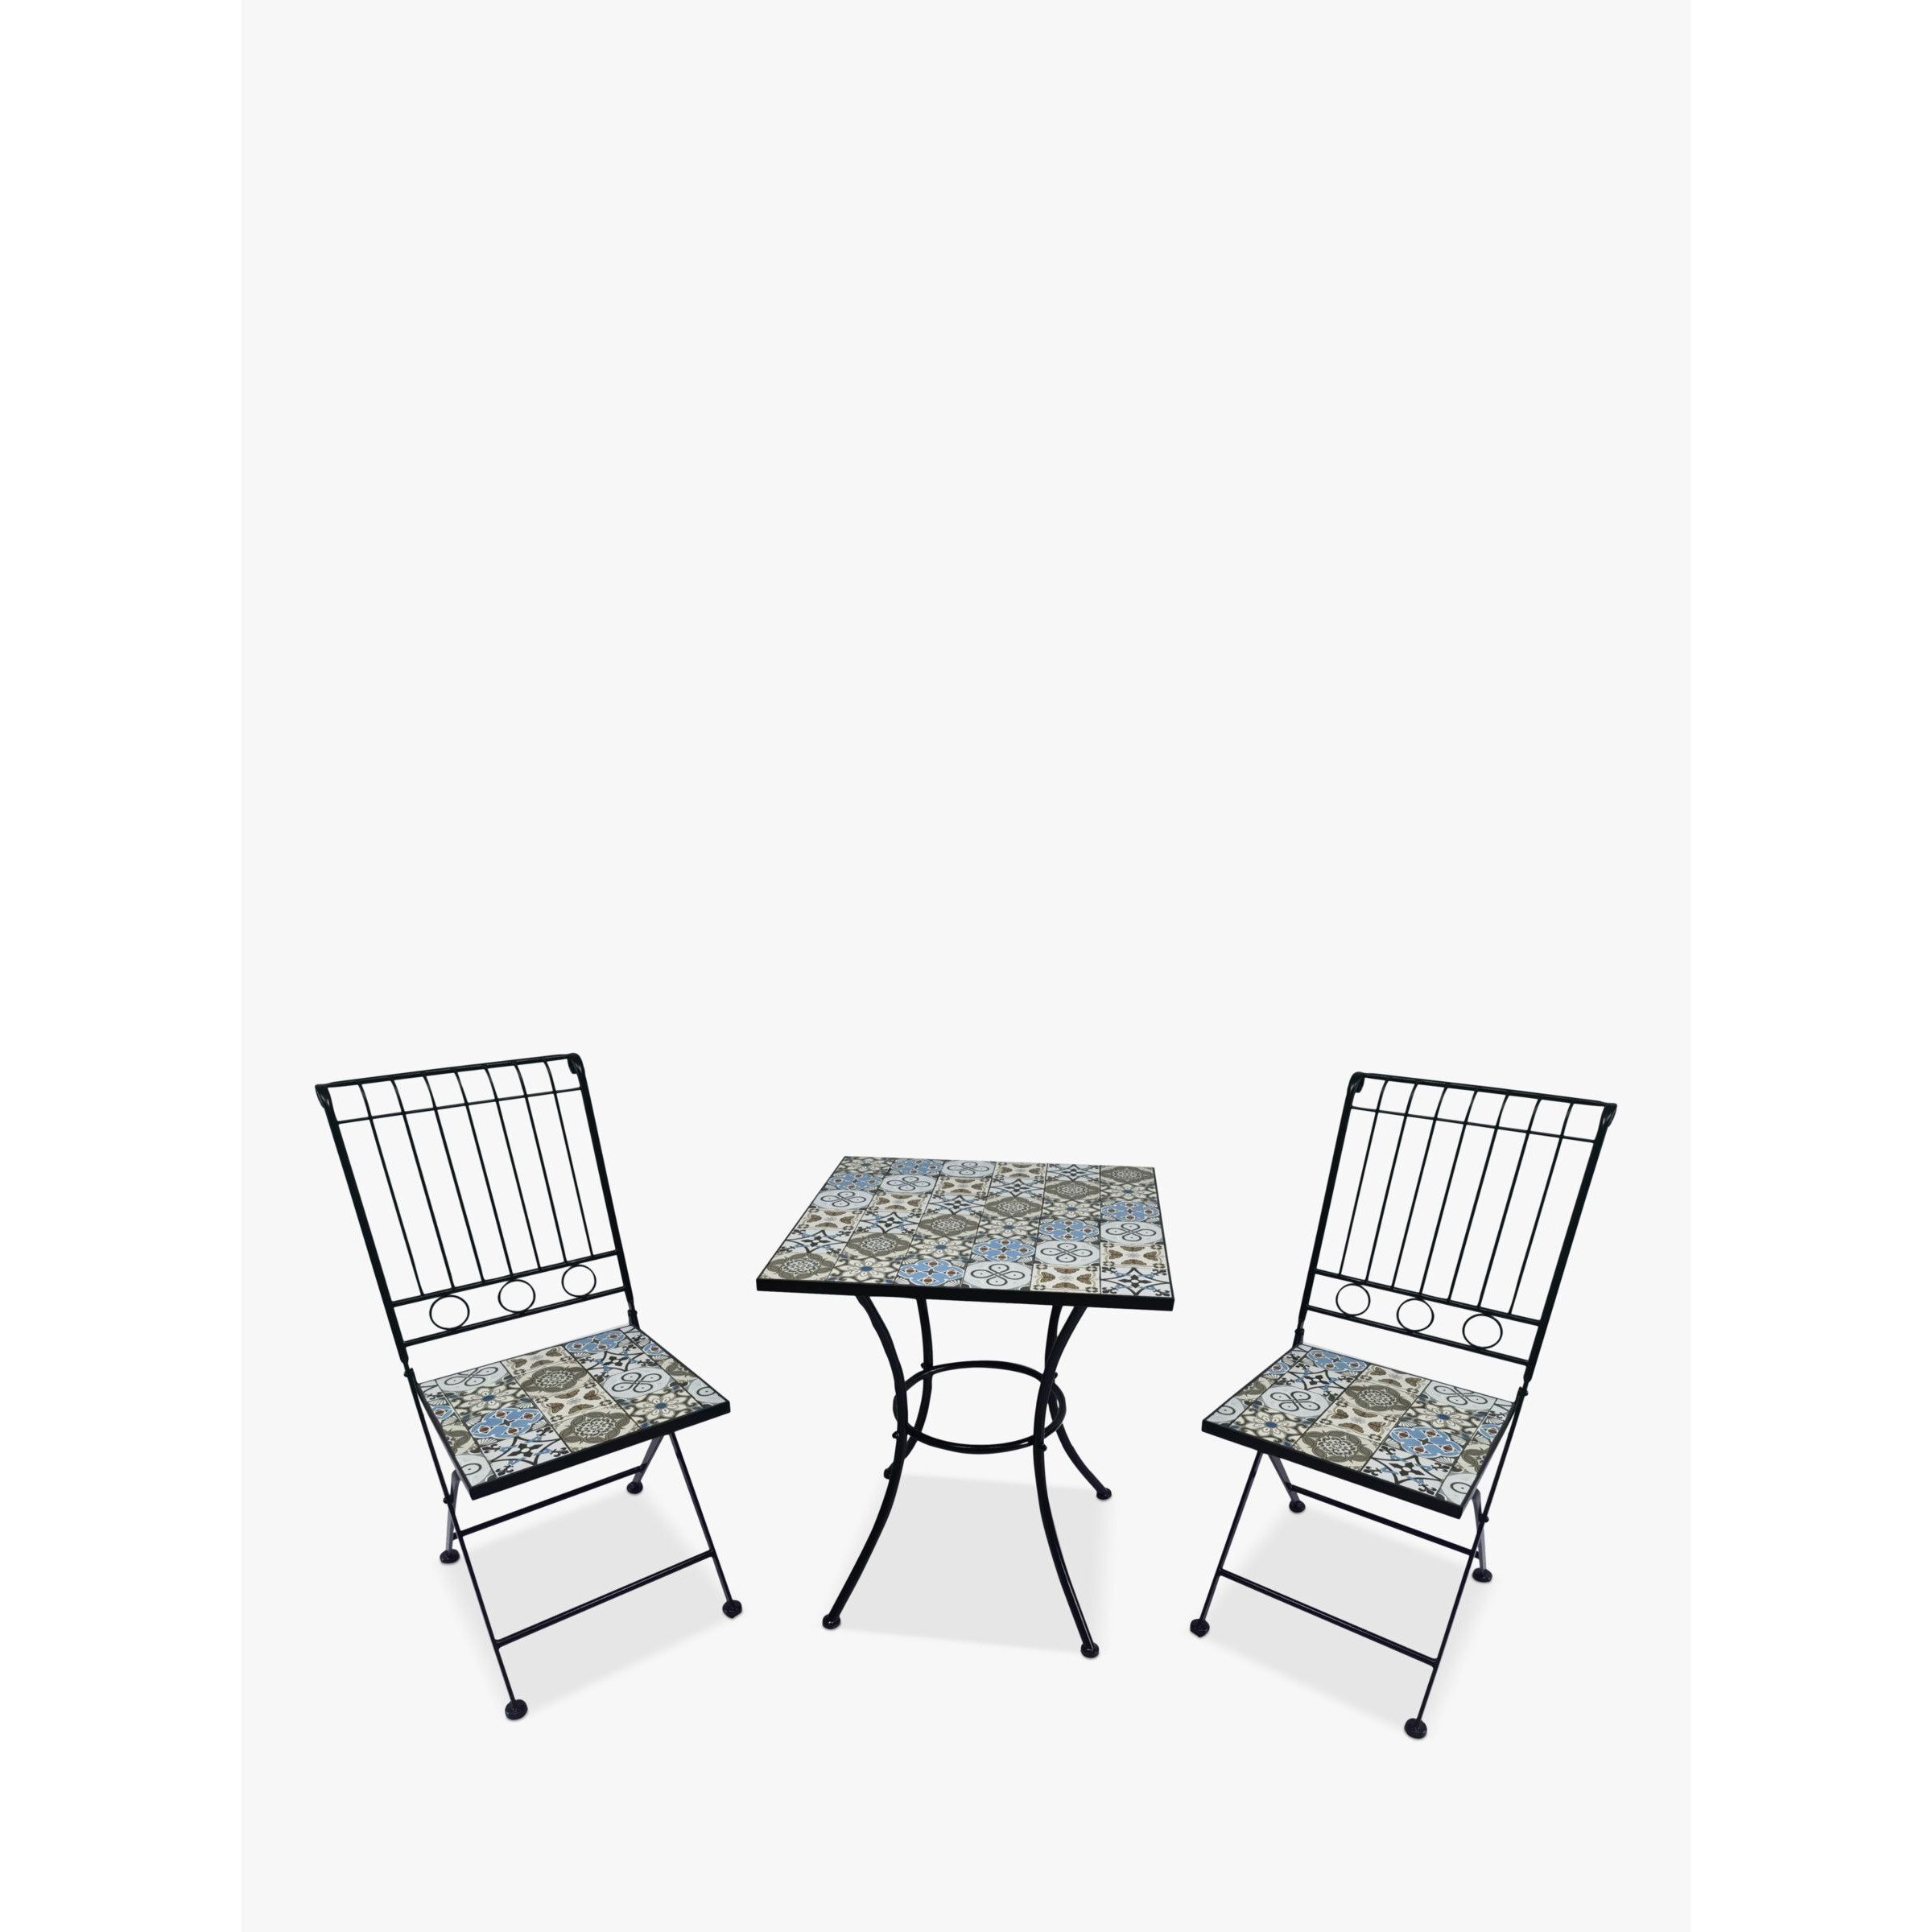 Suntime Alexandria Mosaic 2-Seater Garden Bistro Table & Chairs Set, Black/Multi - image 1